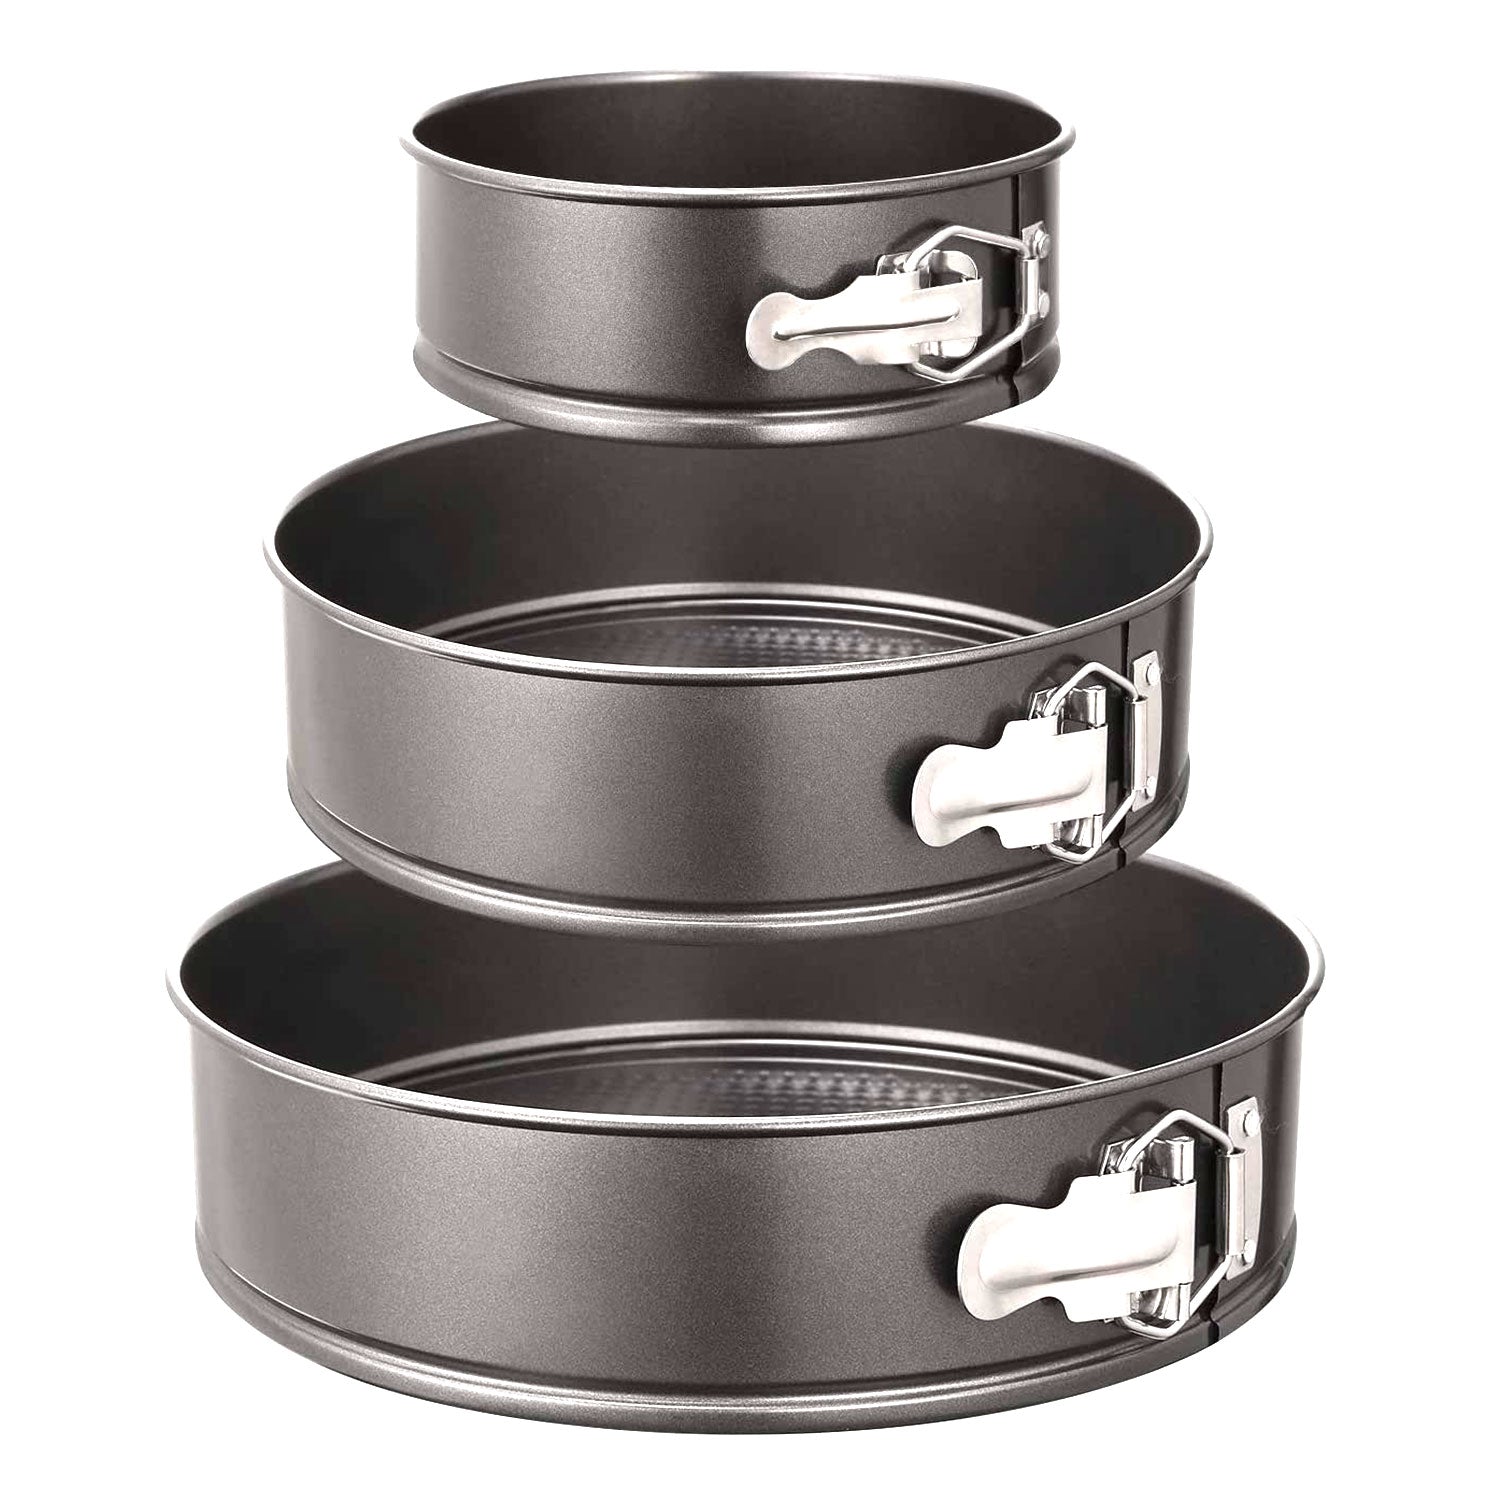 Premius 3-Piece Springform Non-Stick Baking Pan Set, Gray